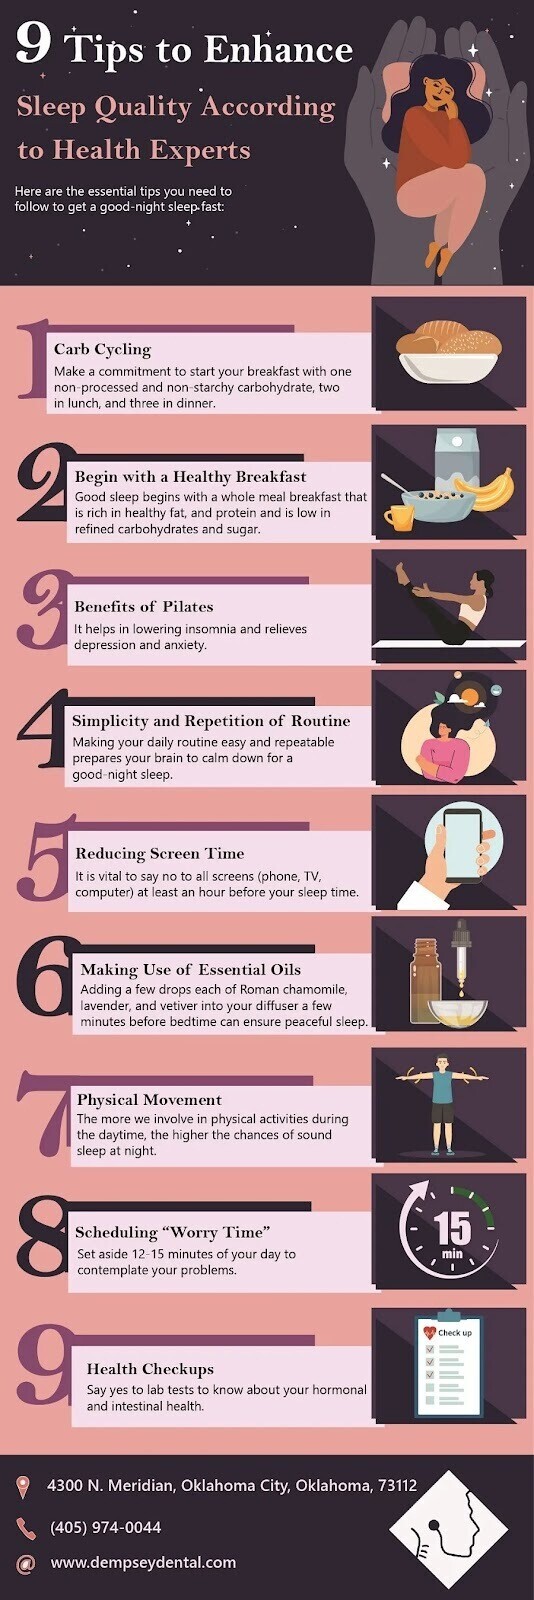 Dempsey Dental's infographic on 9 tips to enhance sleep quality